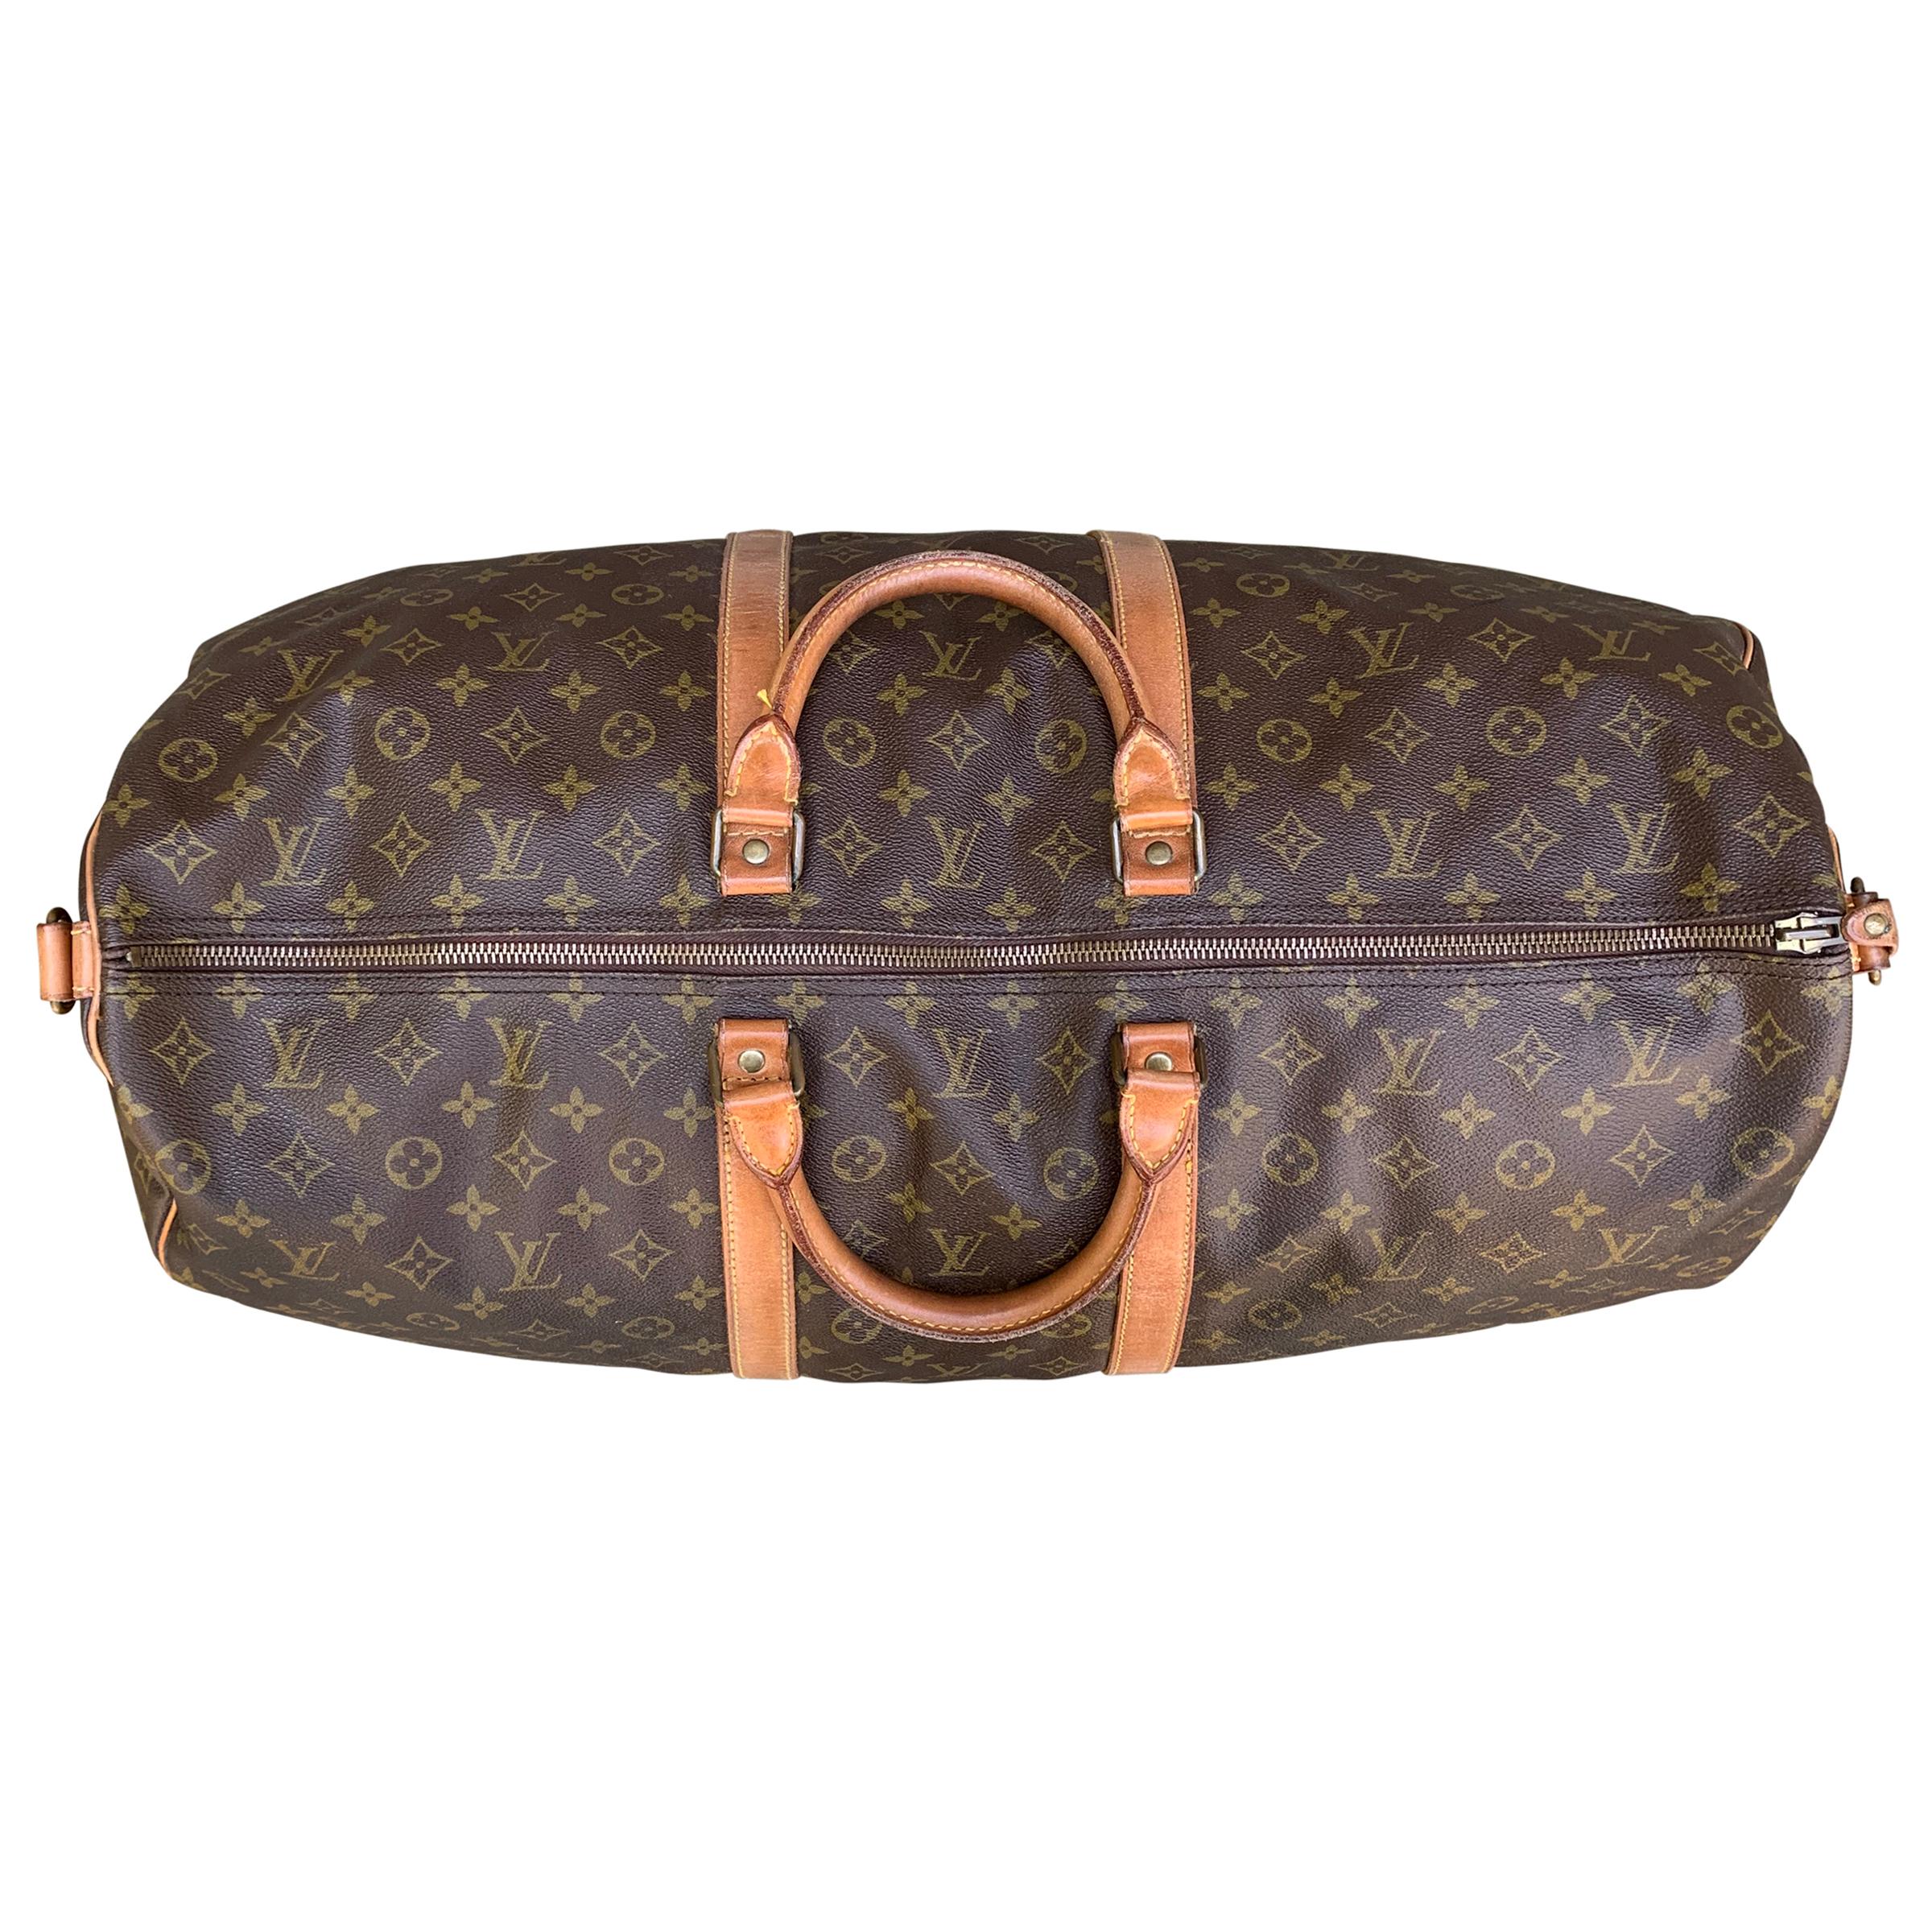 French Vintage Louis Vuitton Duffle Bag